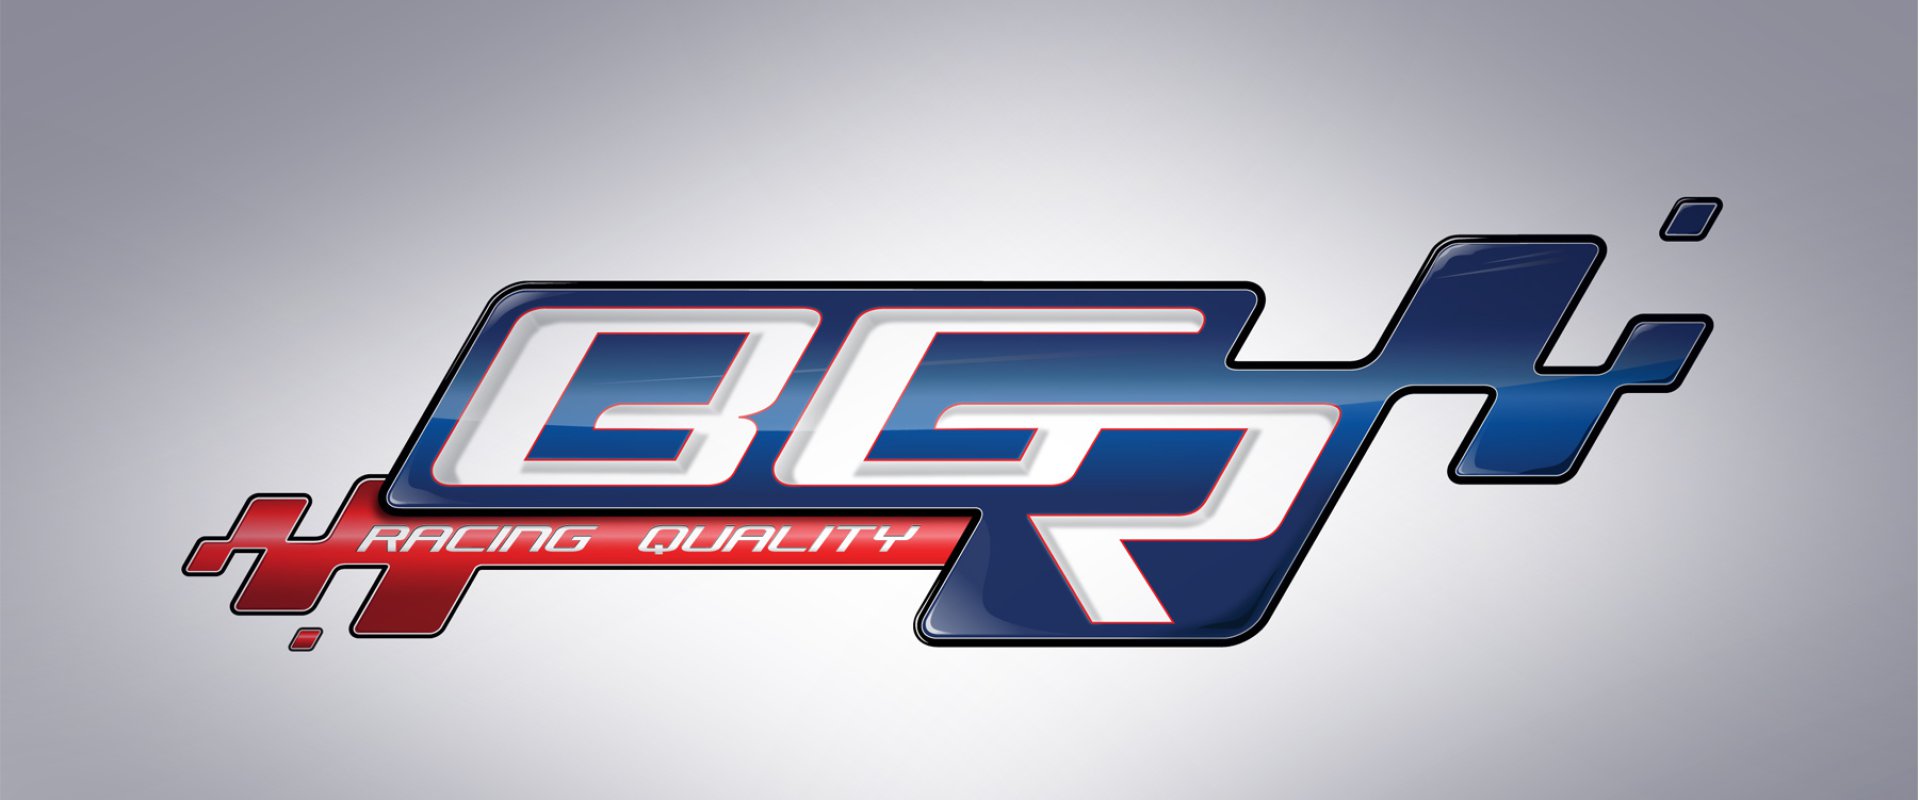 BGR Racing Quality #1